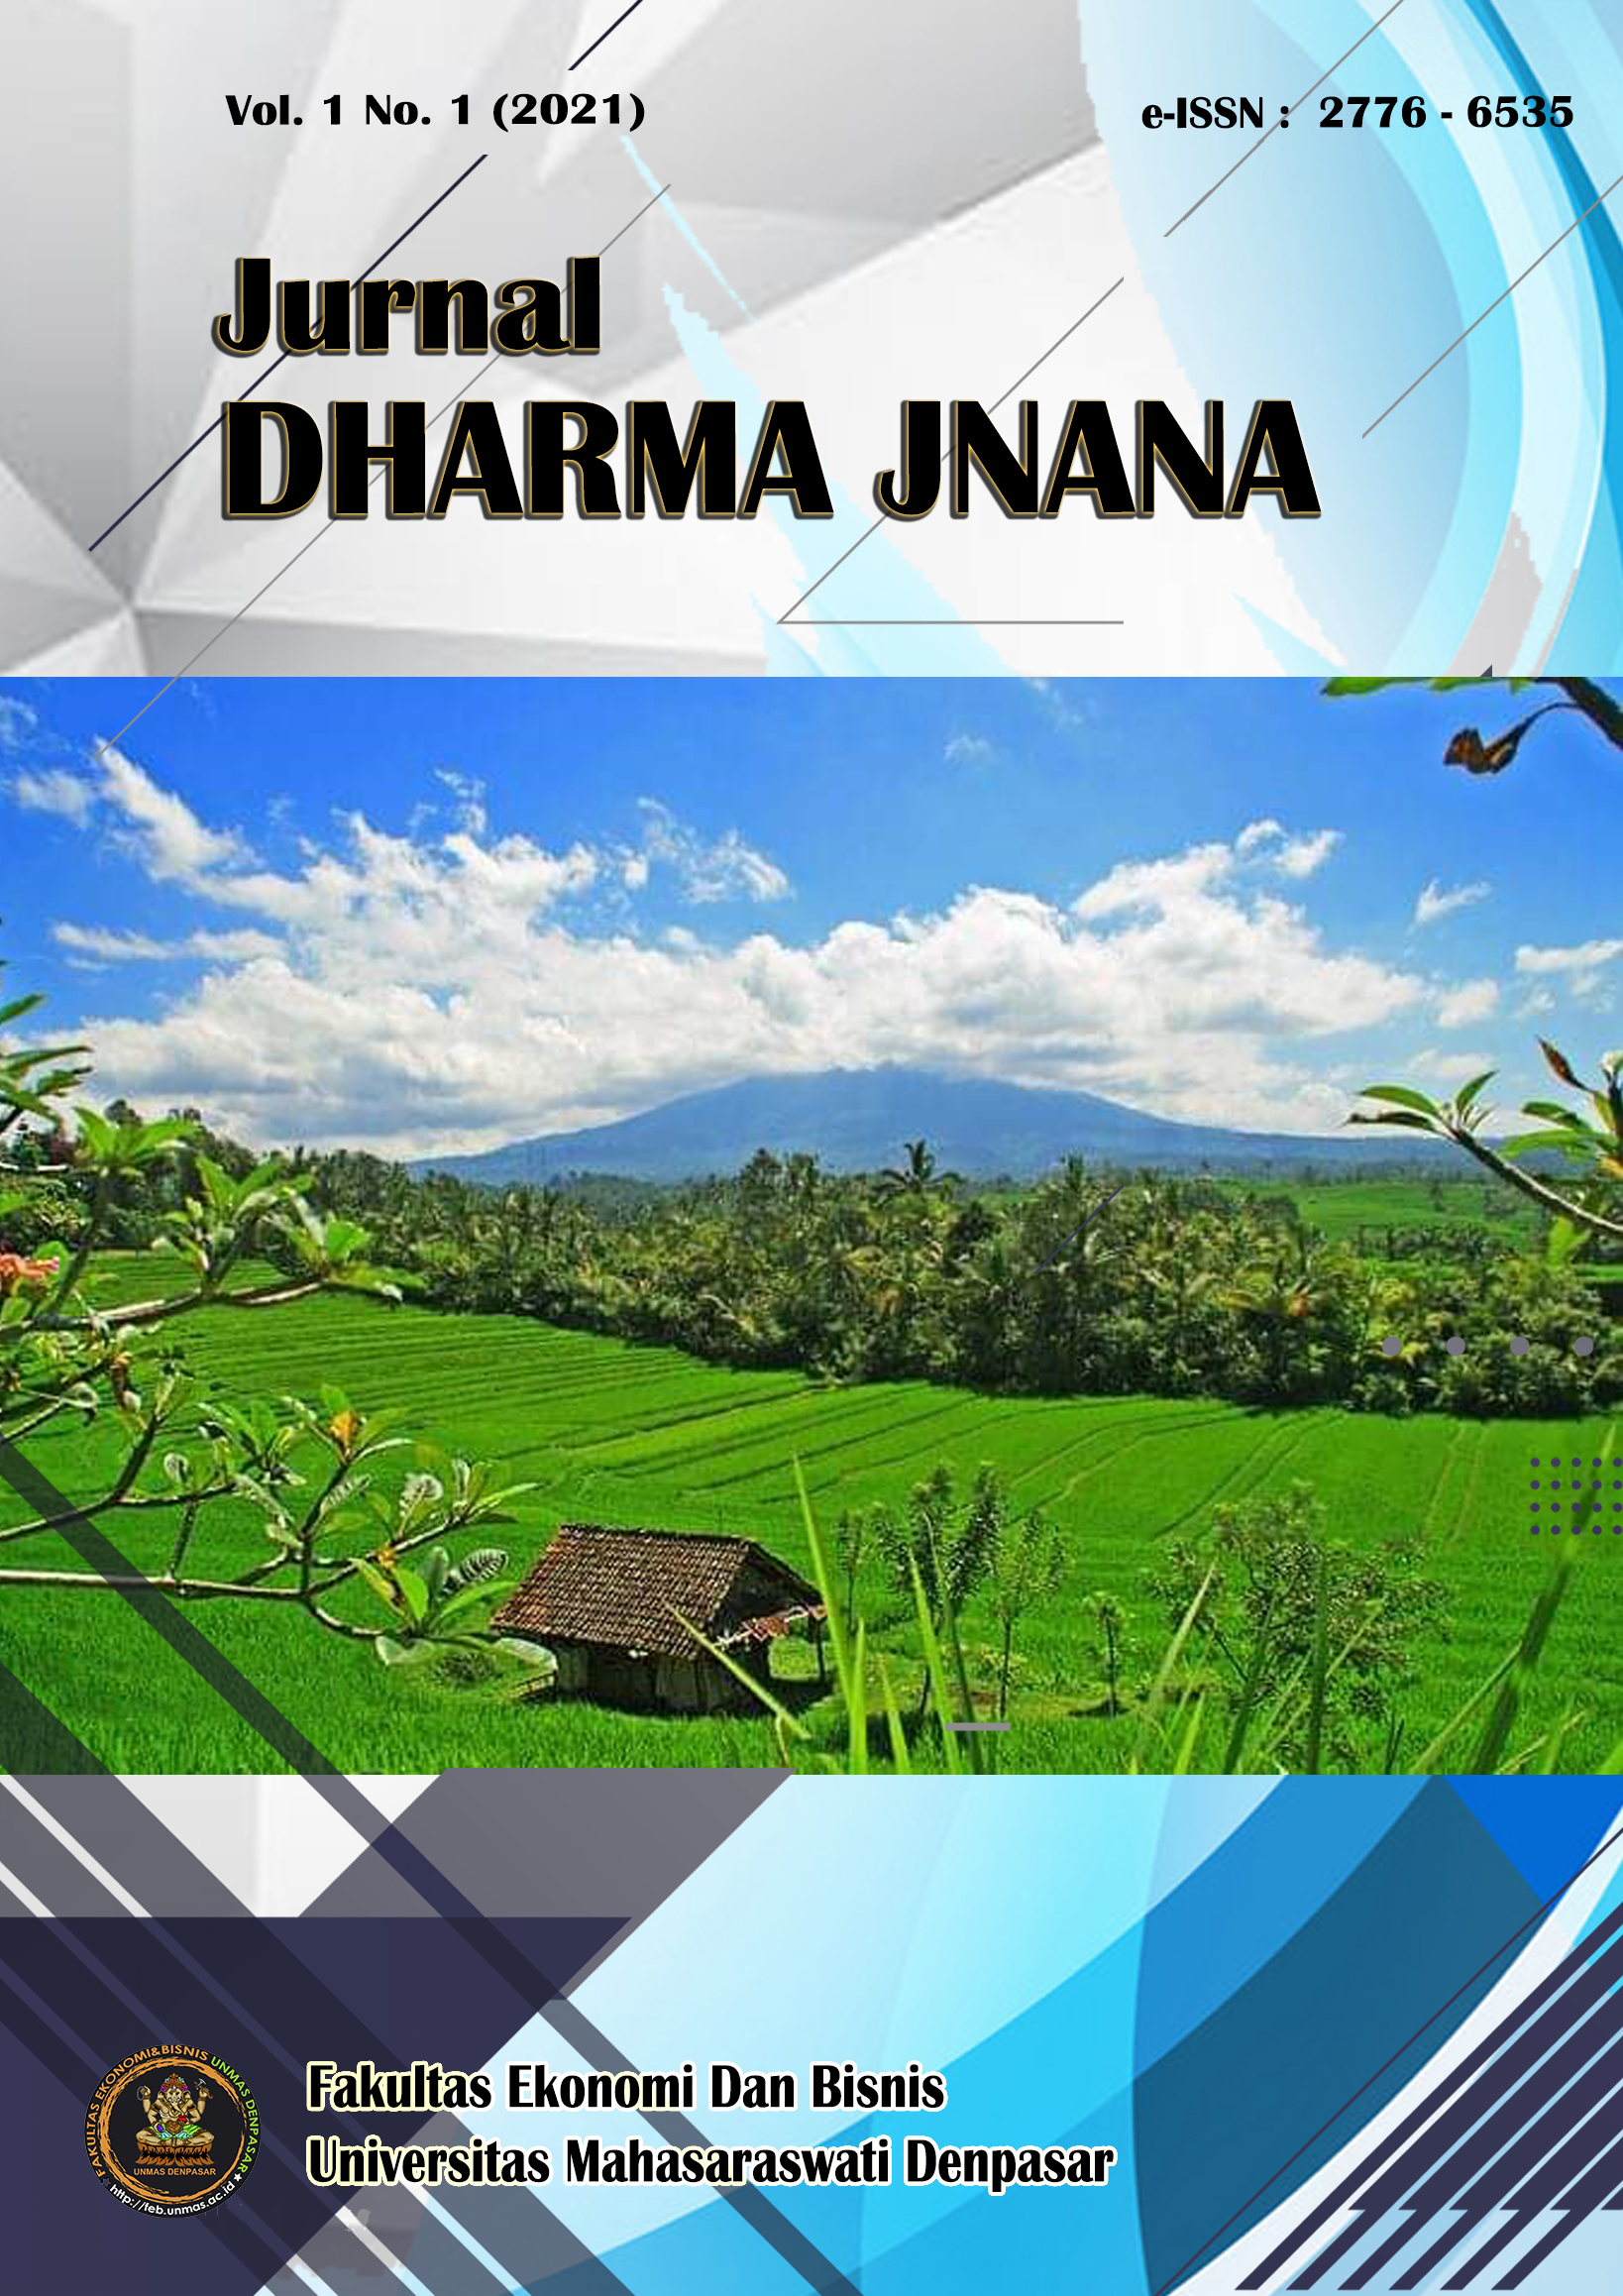 					View Vol. 1 No. 1 (2021): JURNAL DHARMA JNANA
				